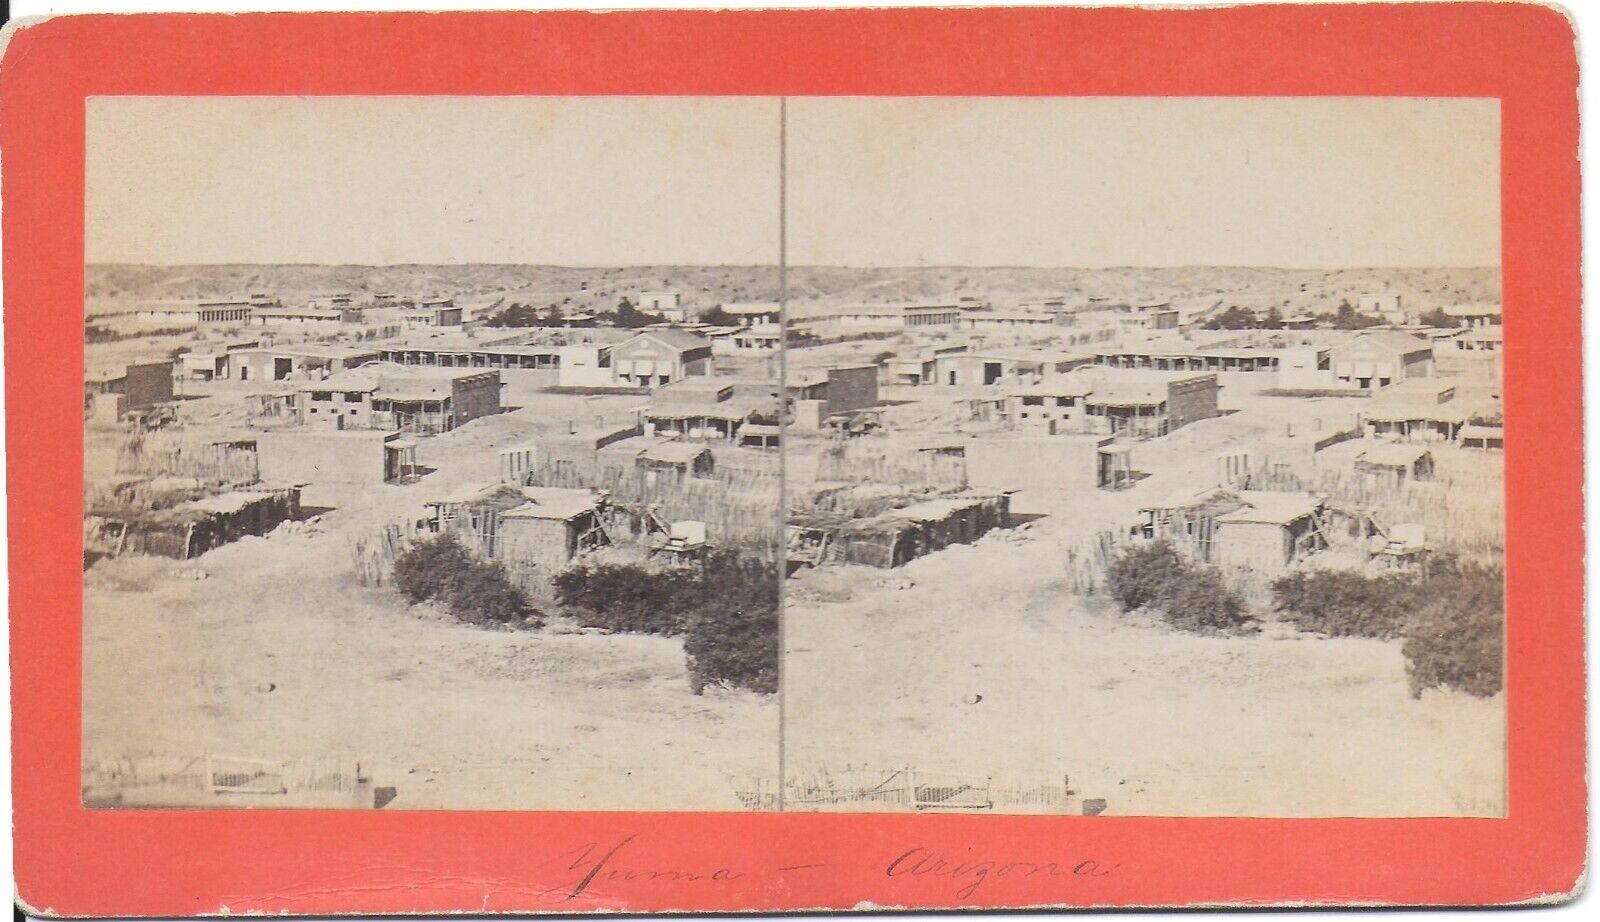 Stereograph View of Yuma Arizona 1880s – Carleton Watkins Image